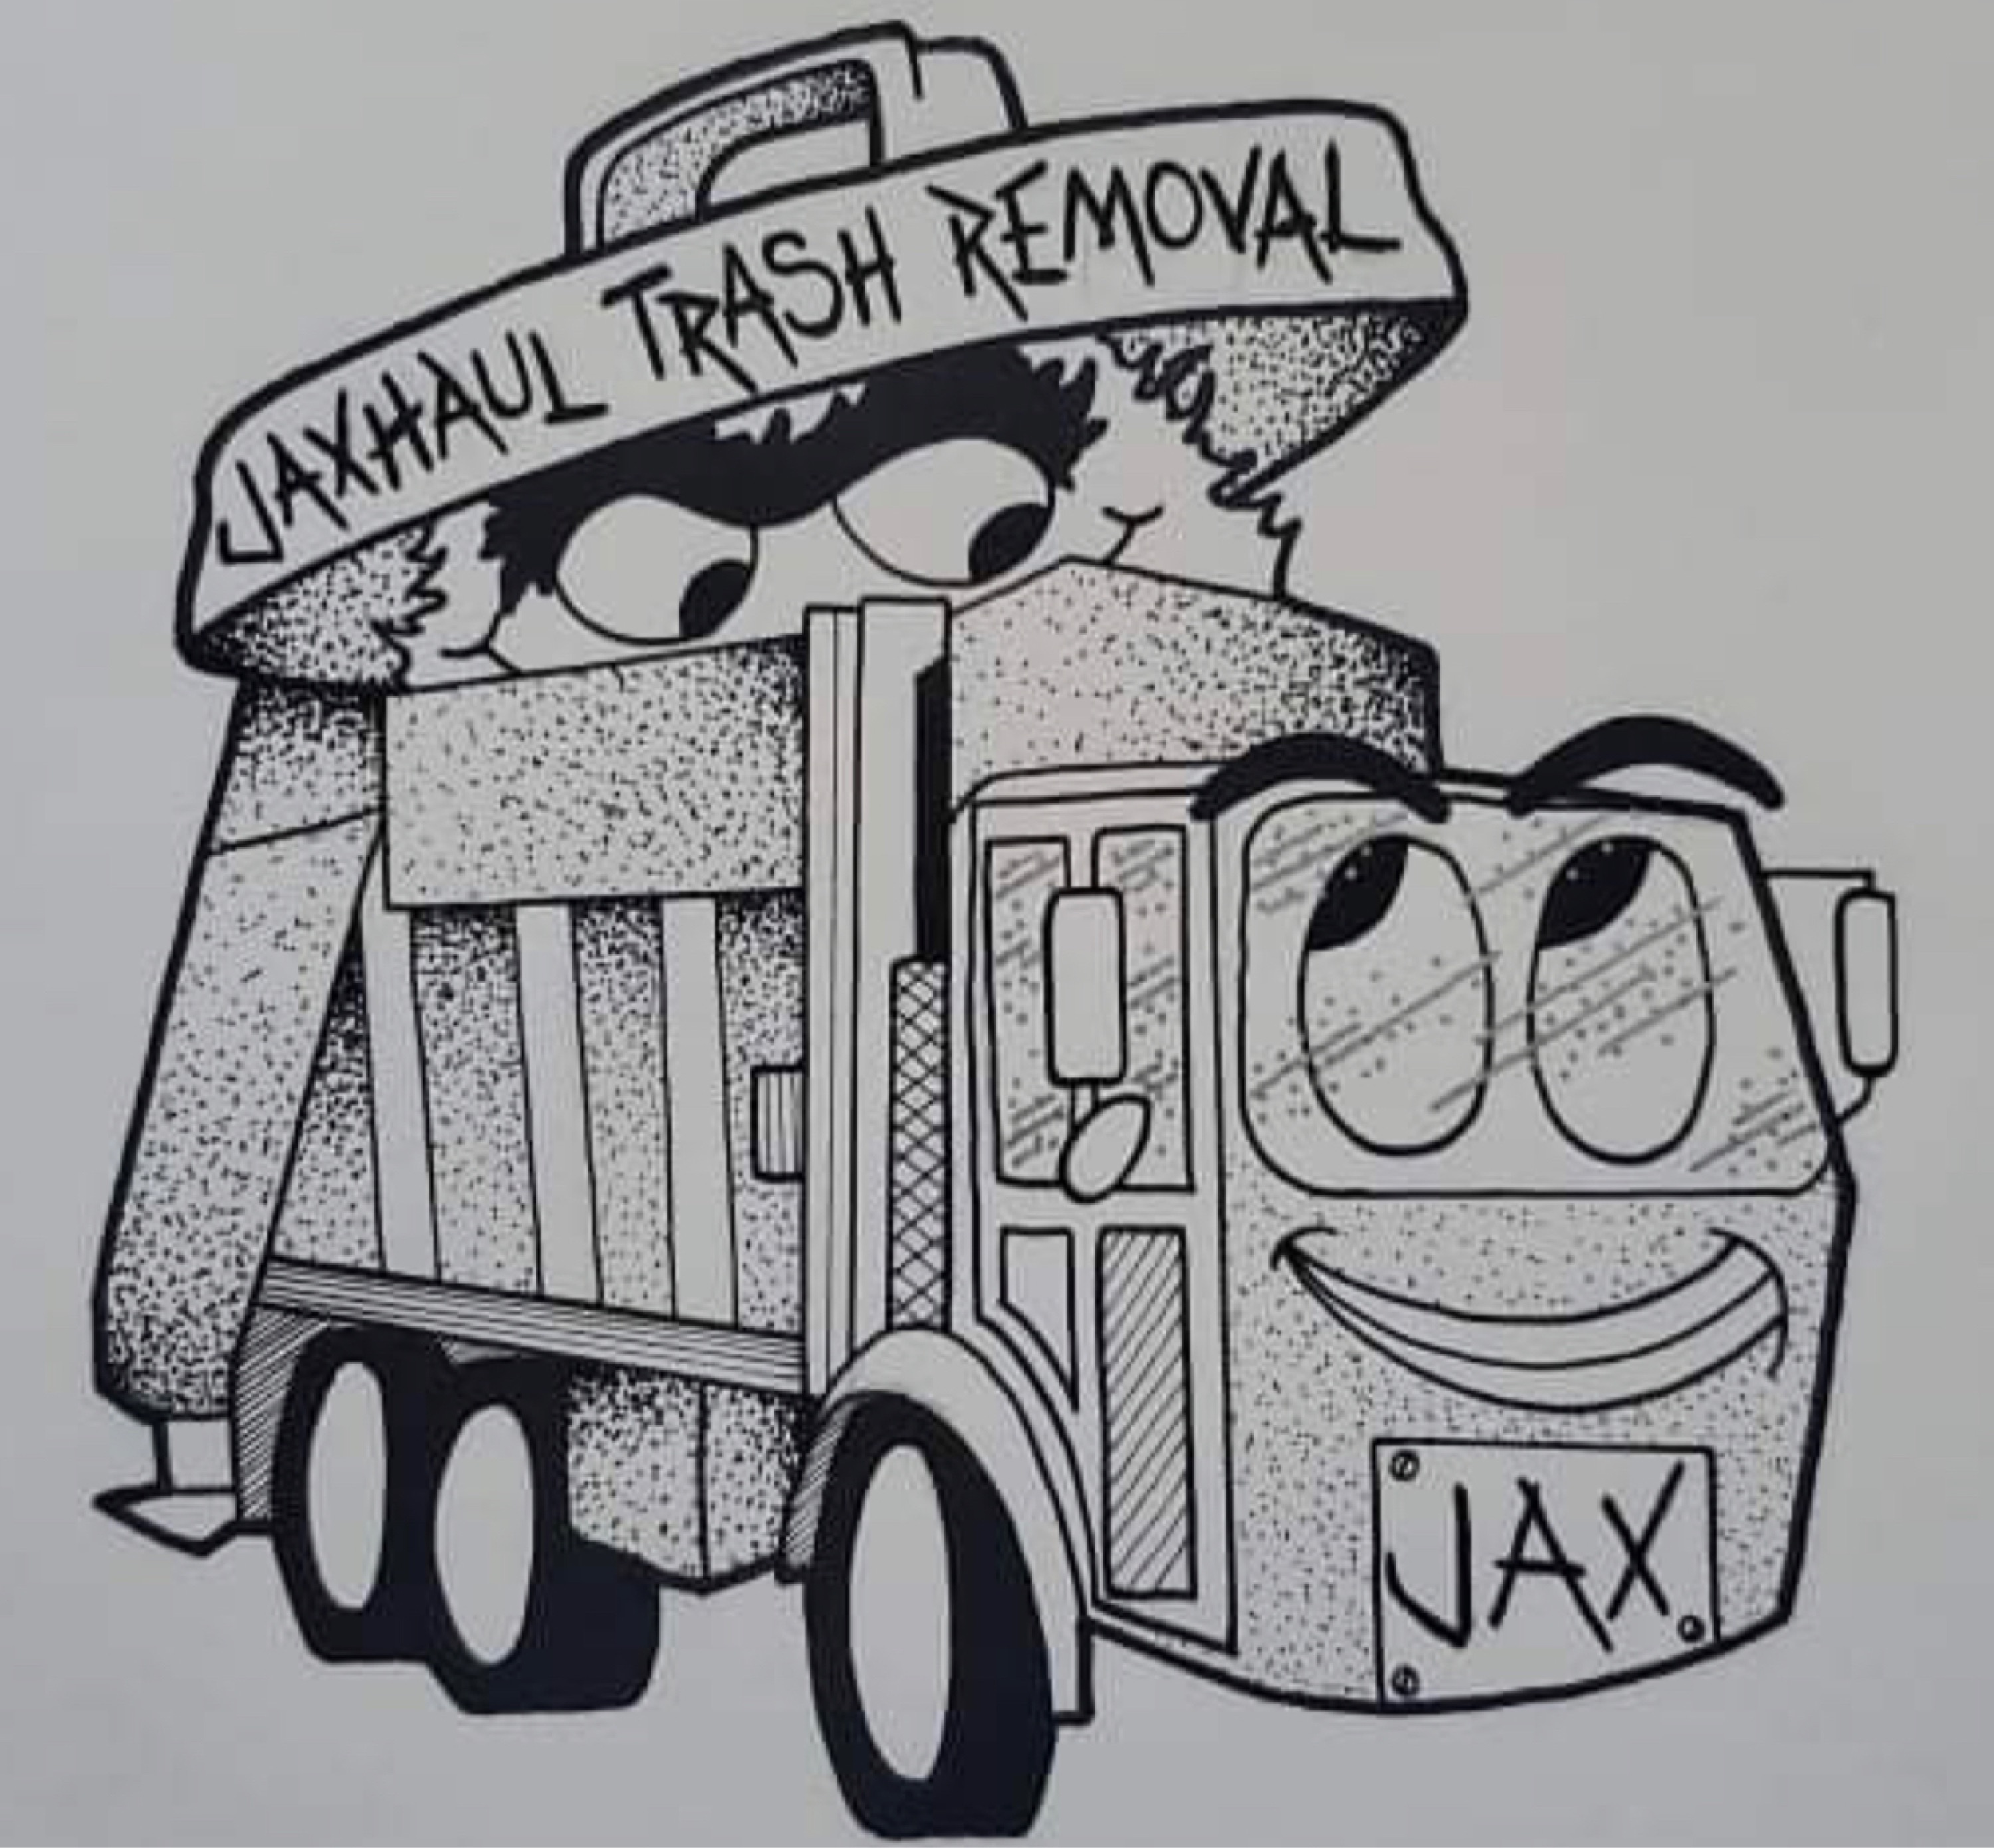 JaxHaul Trash Removal Logo